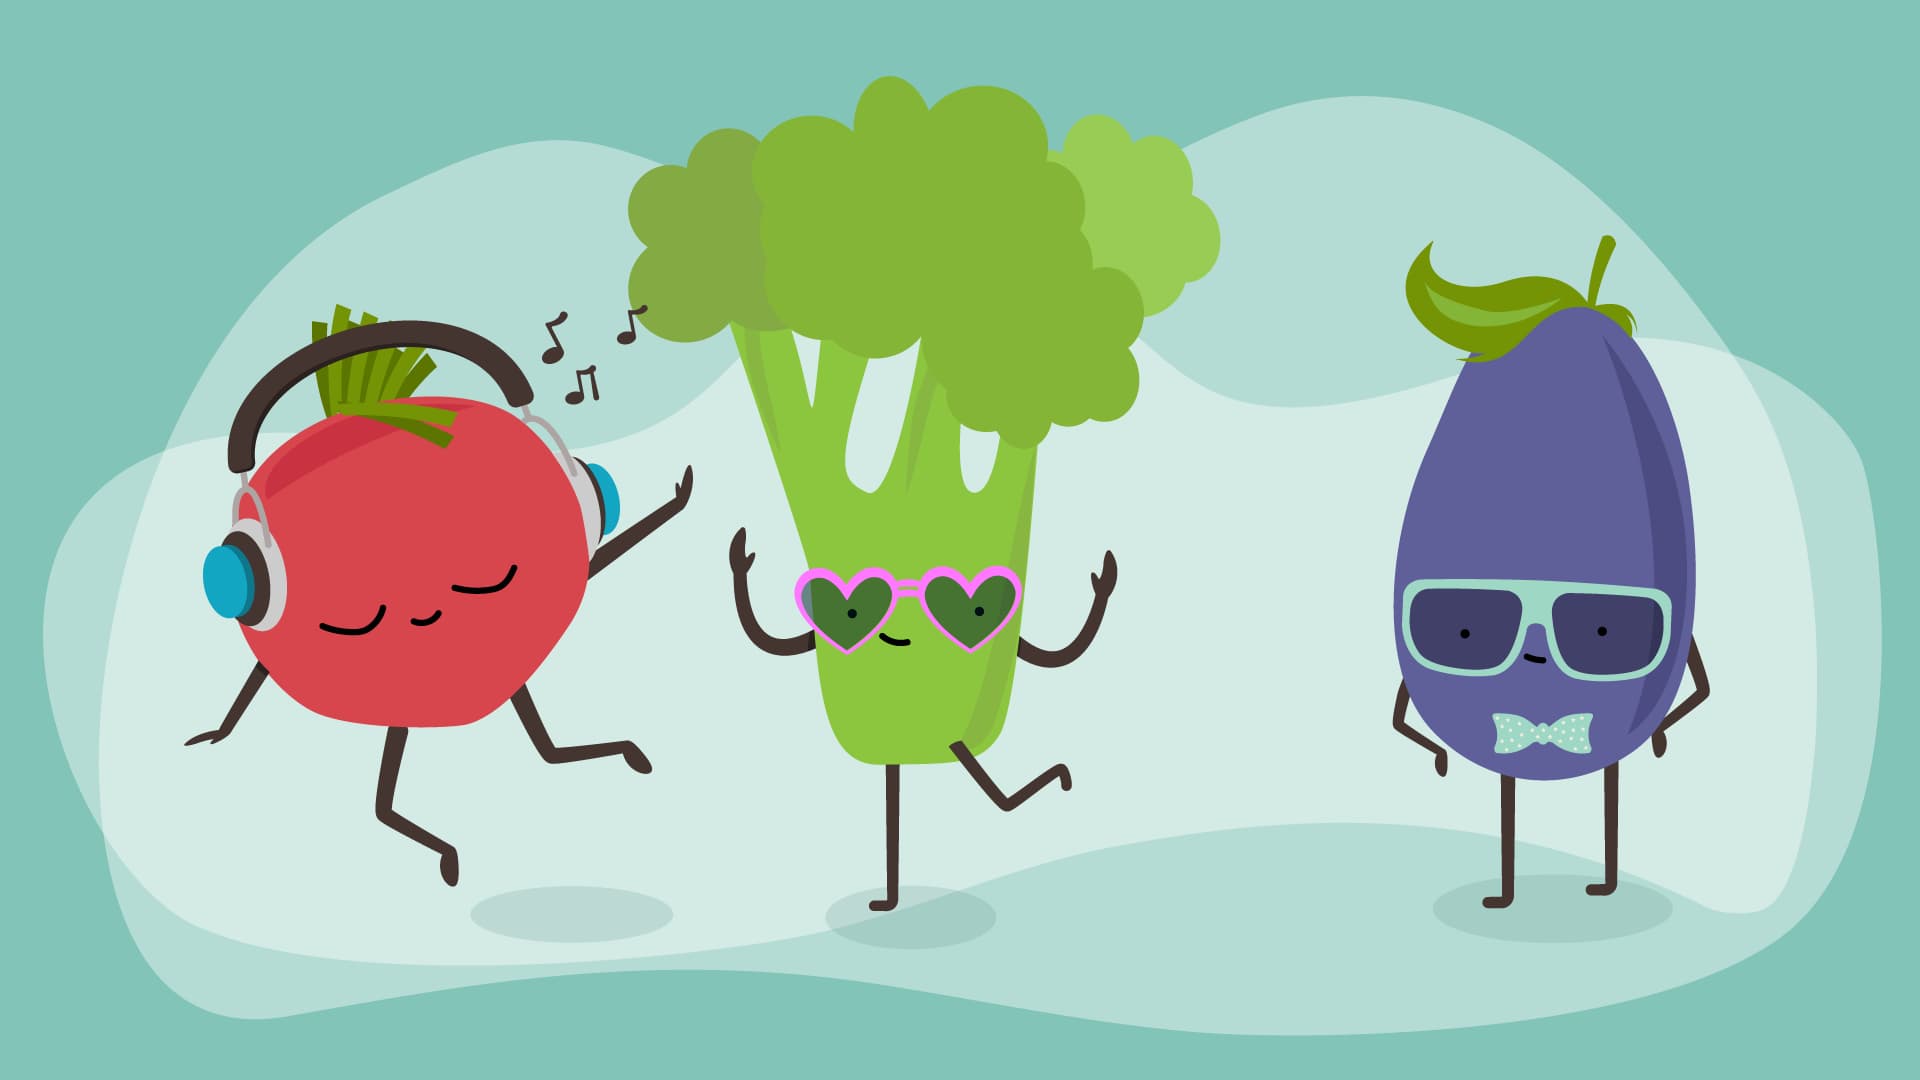 Cool veggies illustration